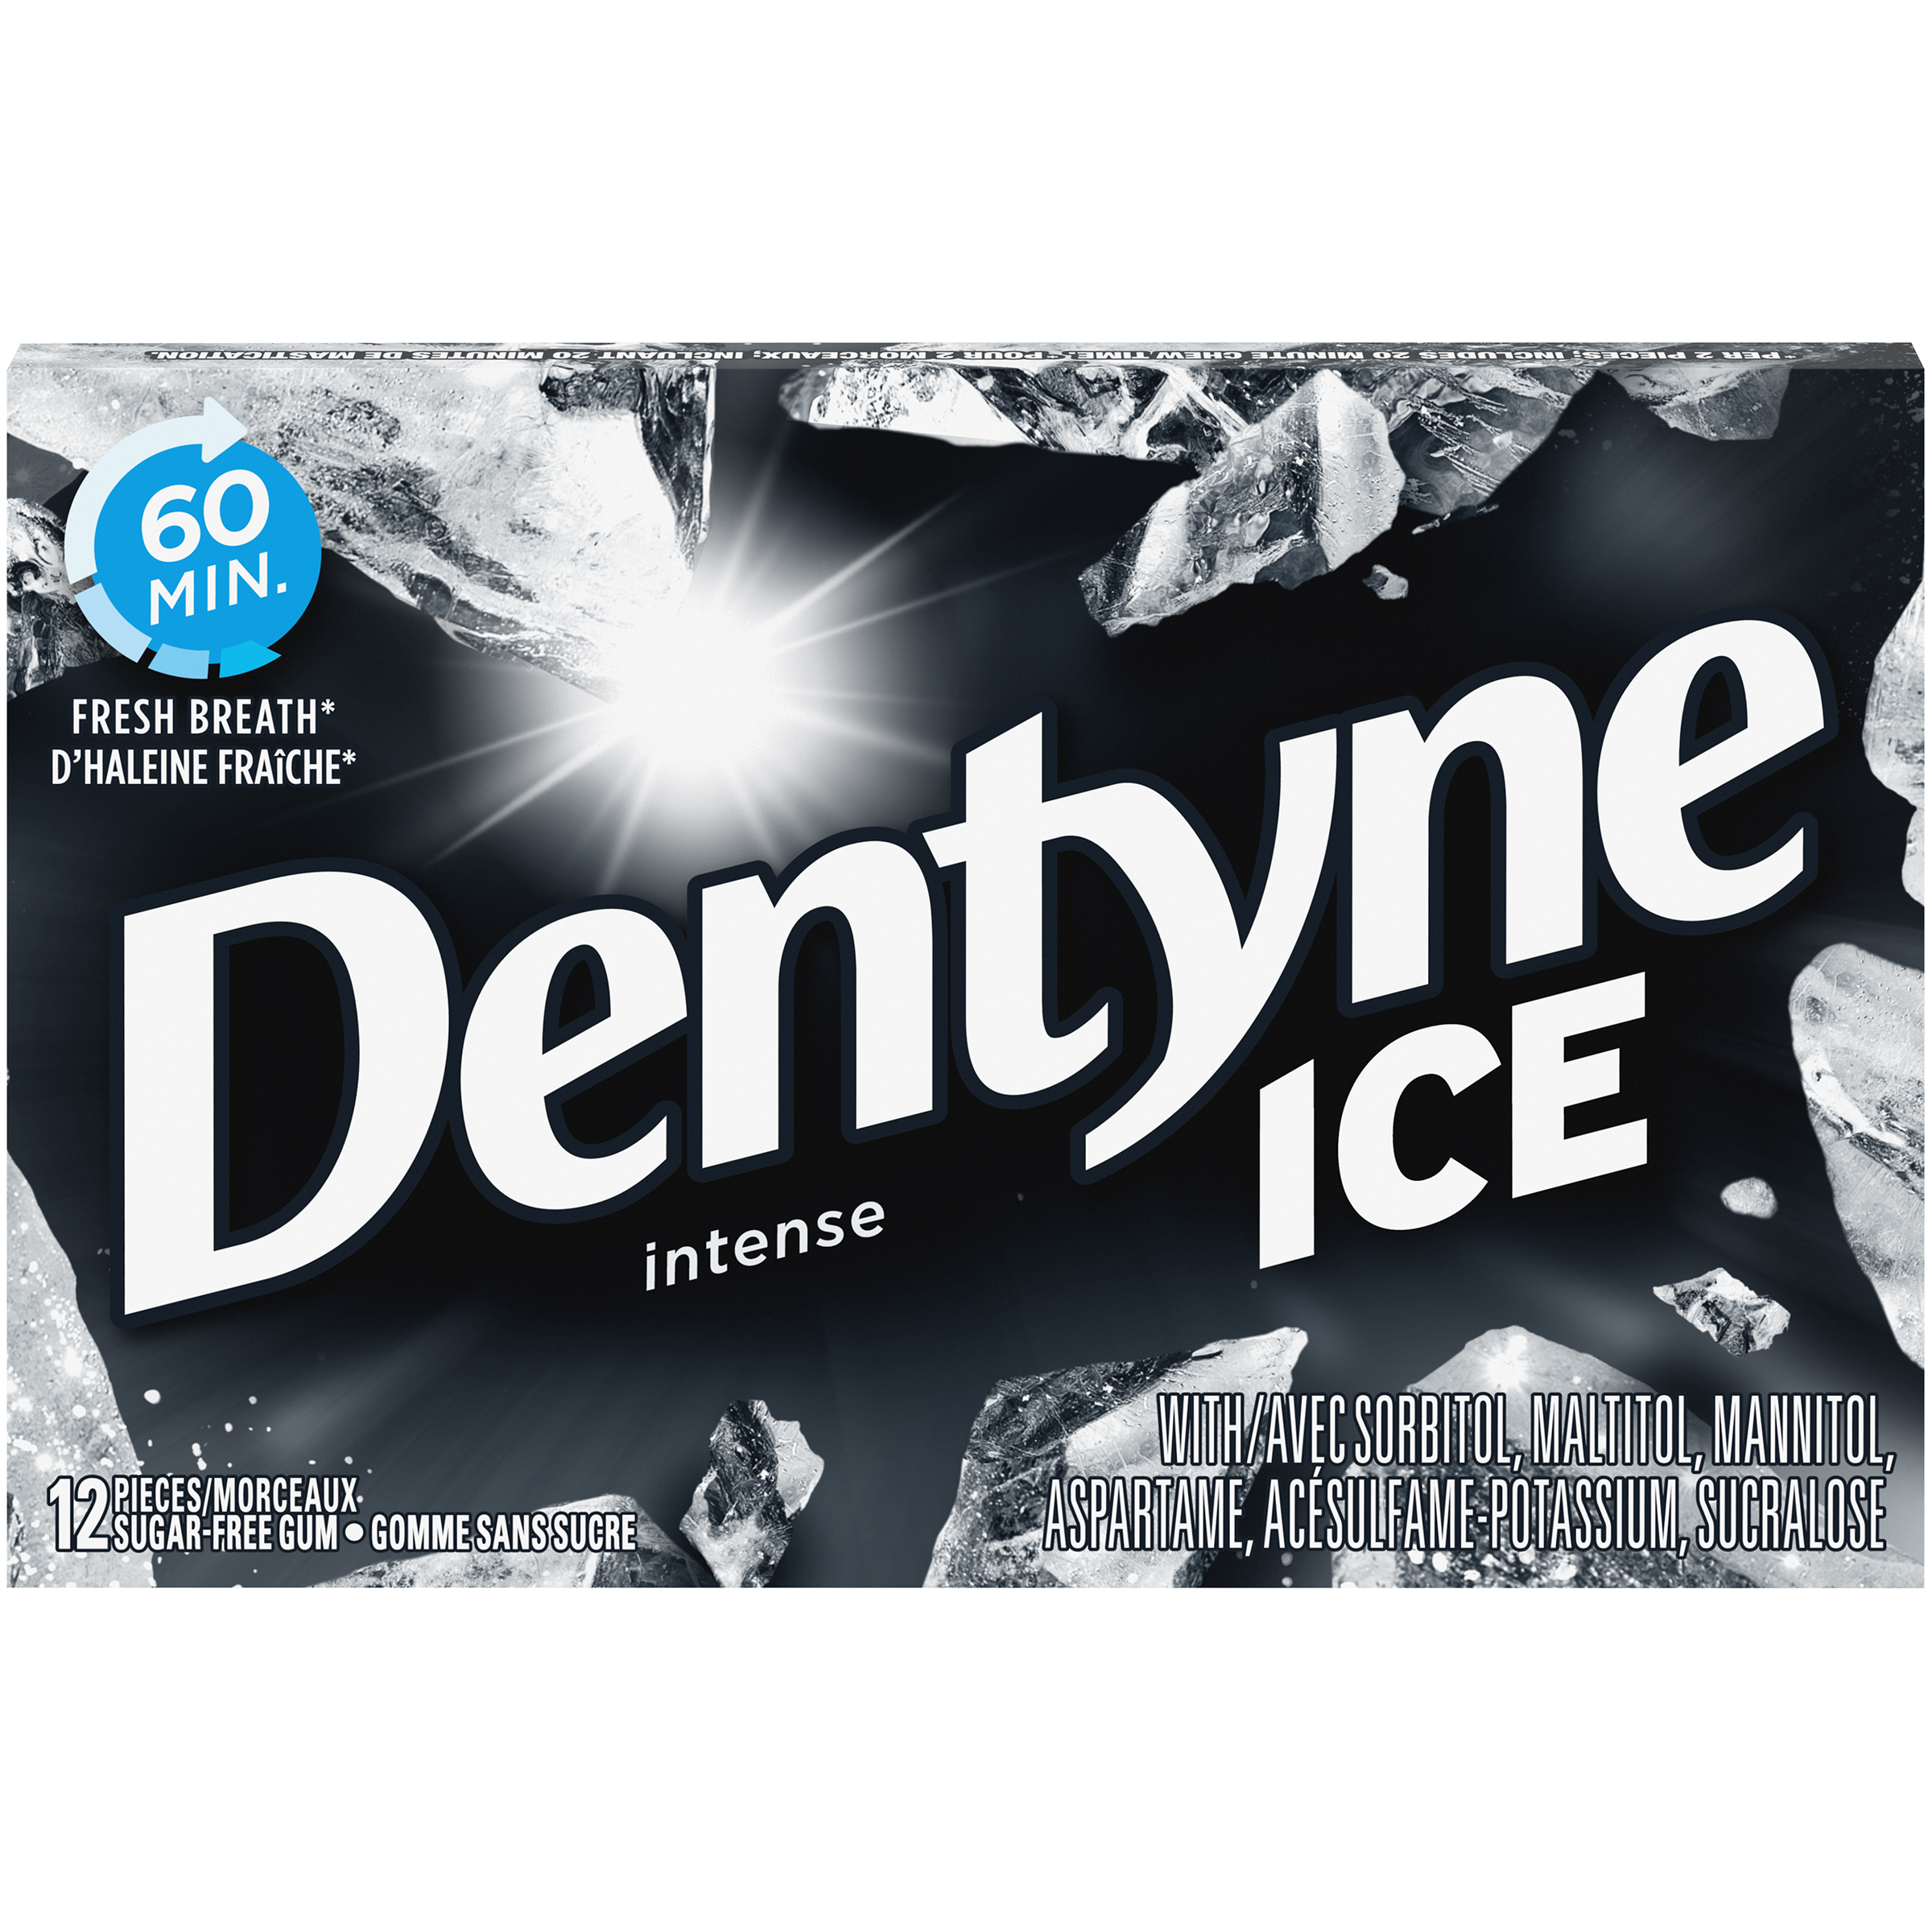 Dentyne Ice Intense, Sugar Free Gum, 1 pack (12 pieces per pack)-0